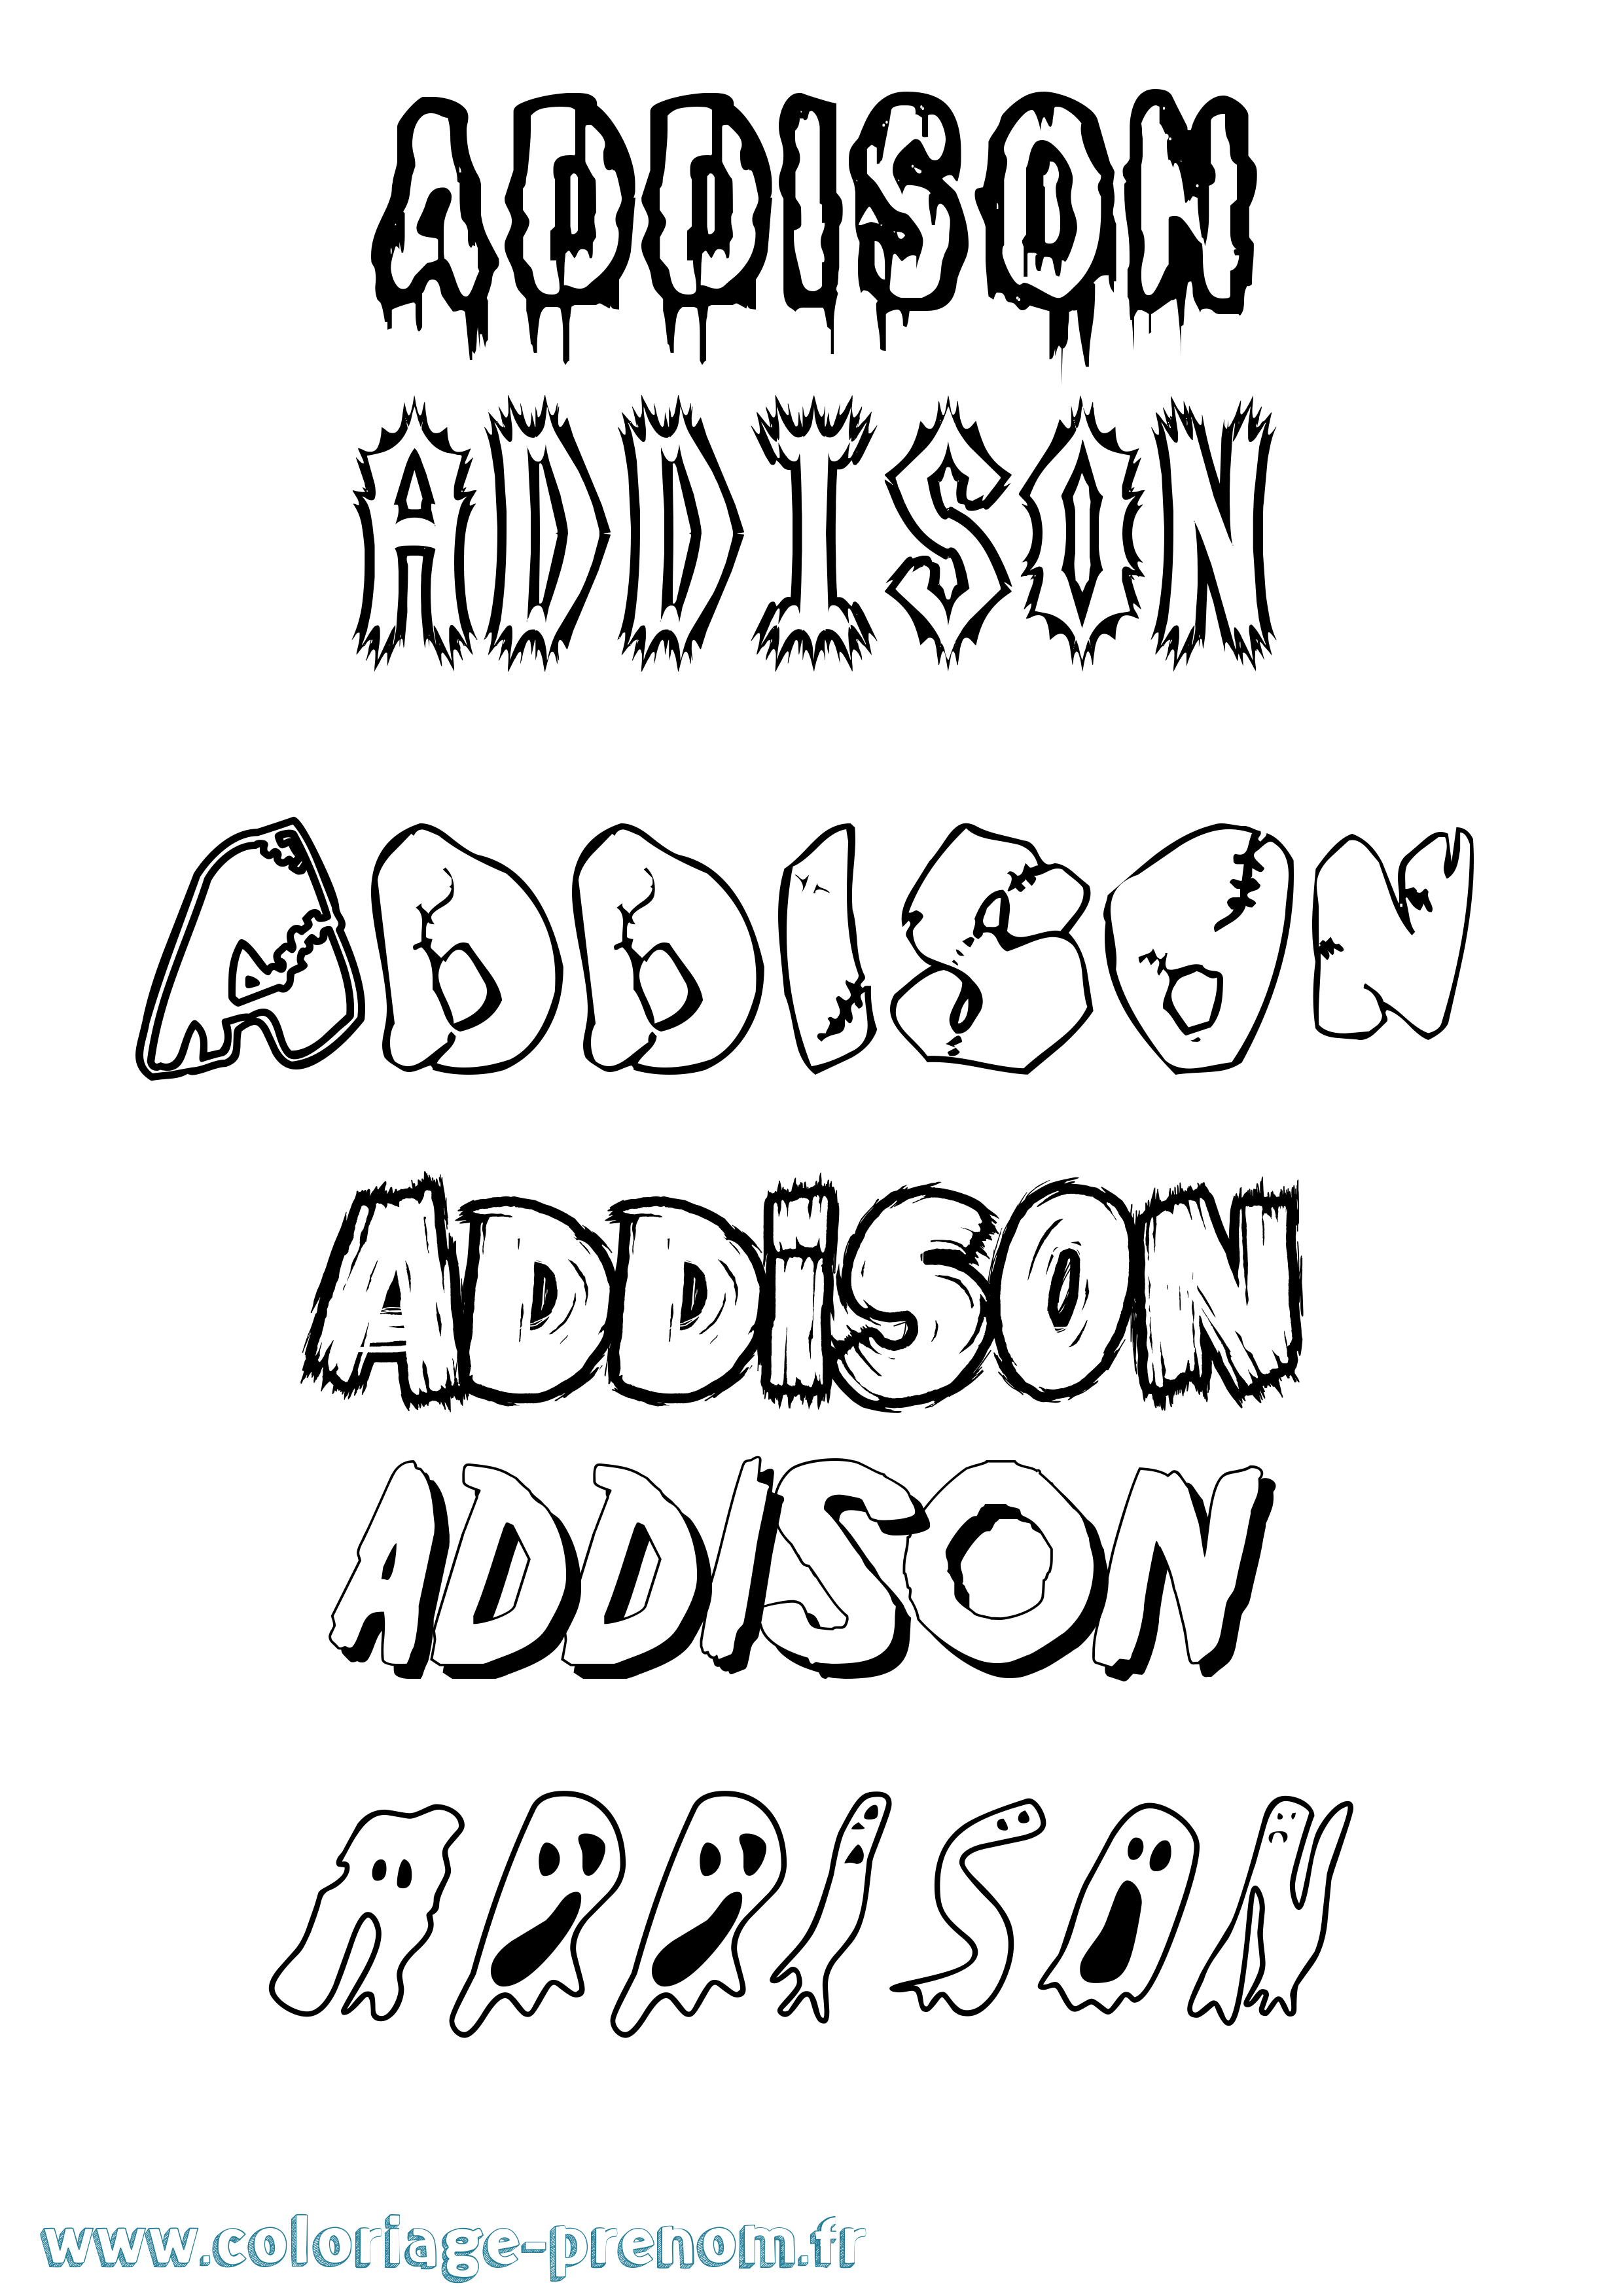 Coloriage prénom Addison Frisson